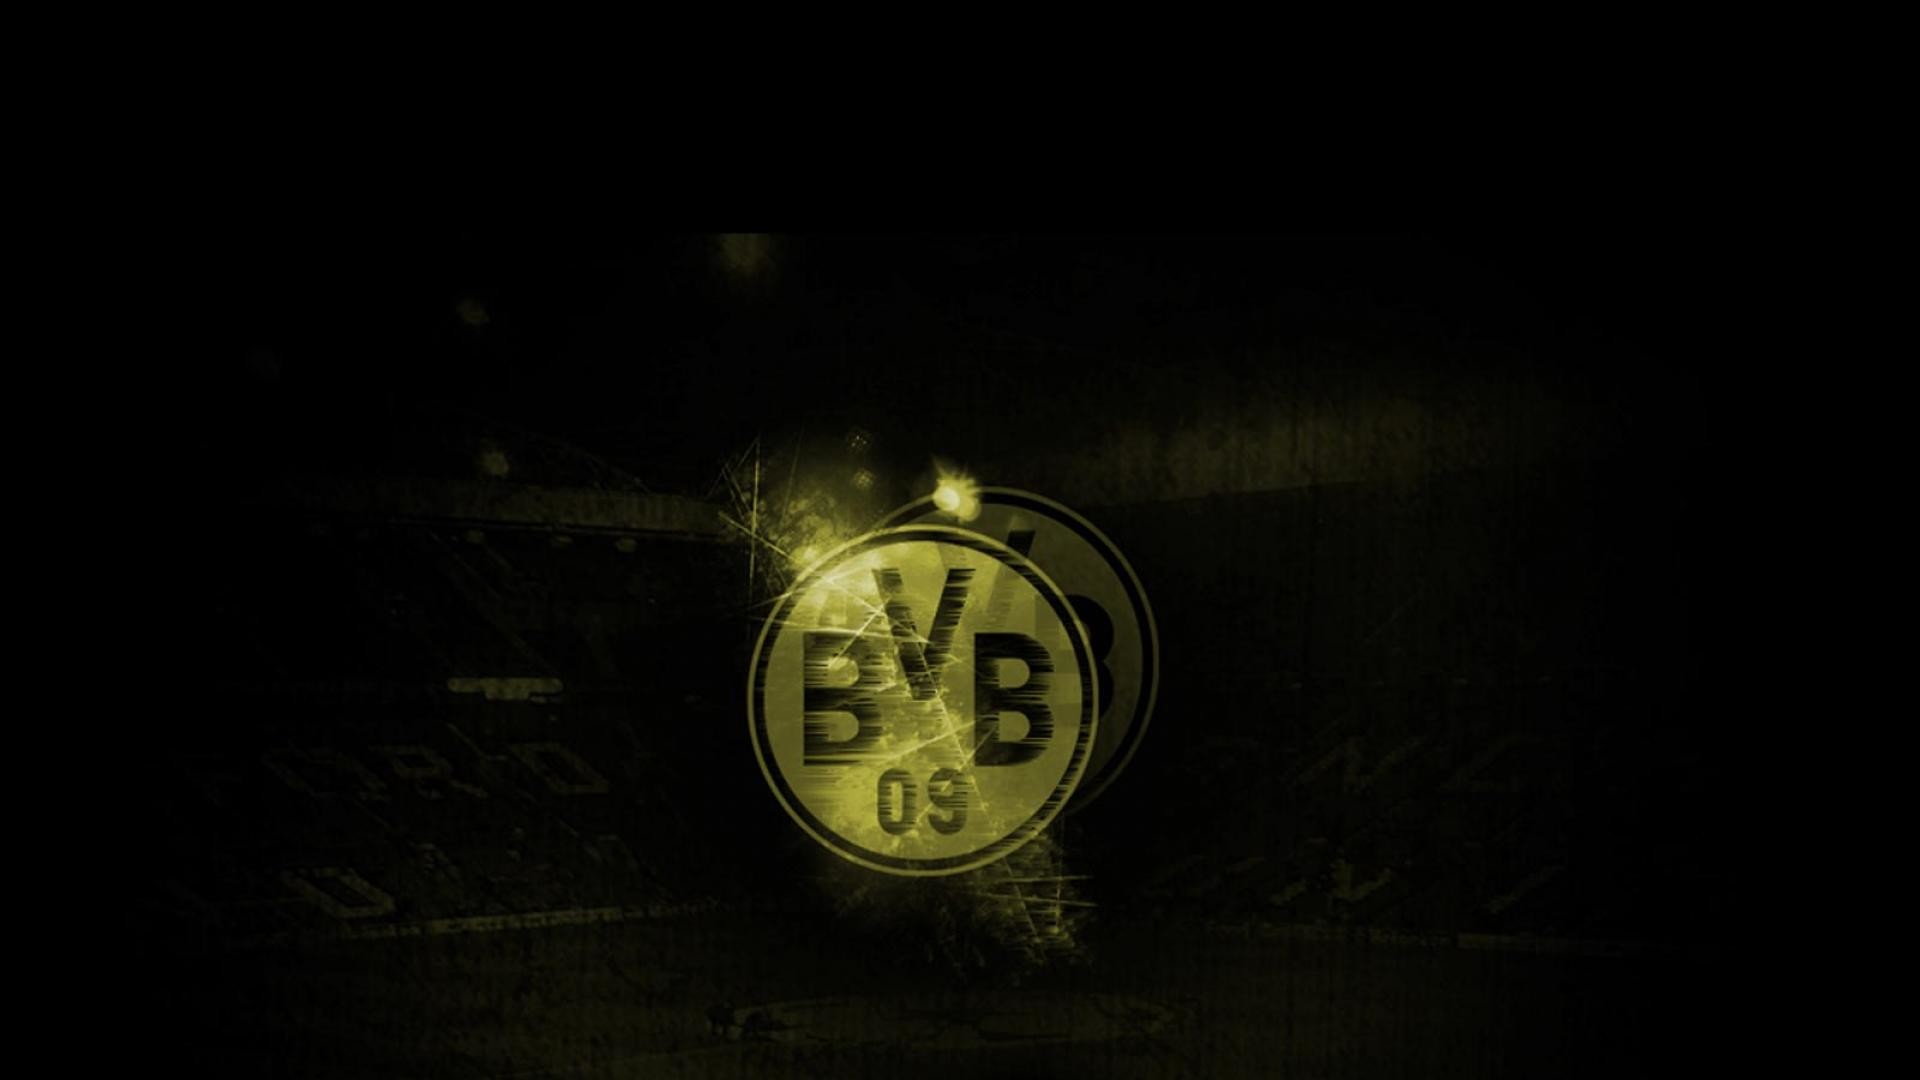 1920x1080 Best-ideas-about-Borussia-Dortmund-on-Pinterest-Bvb-